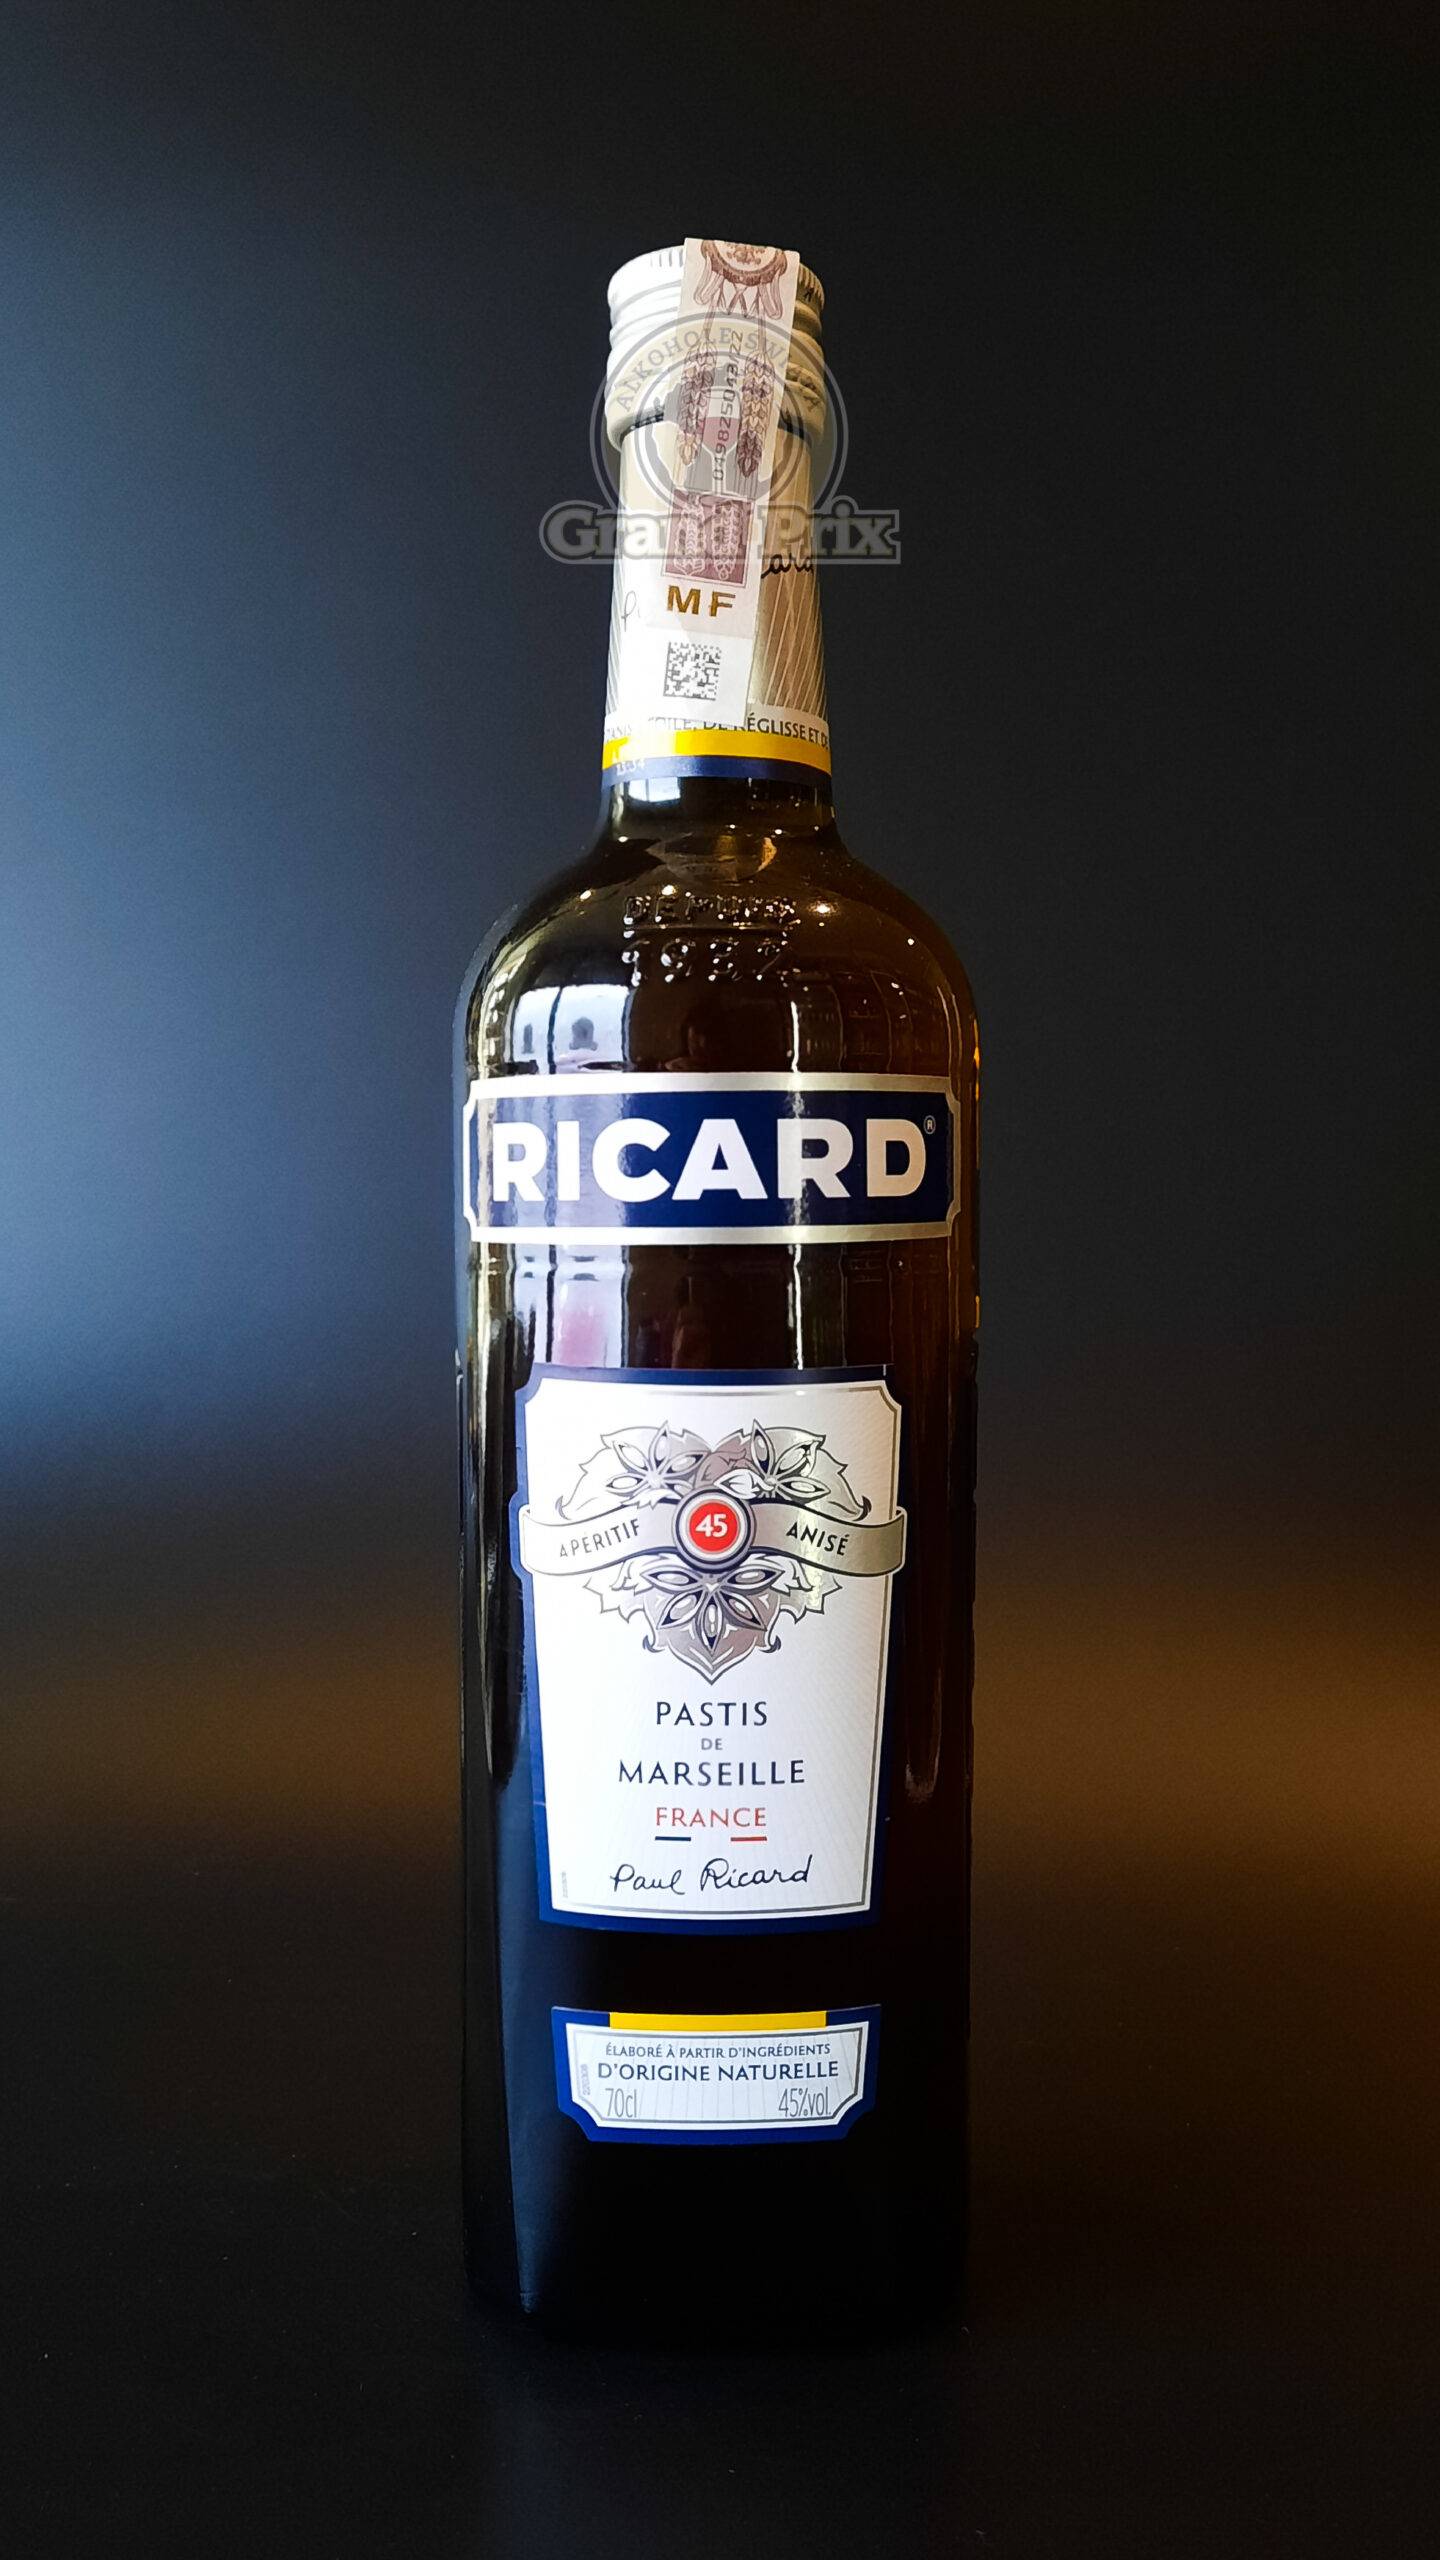 RICARD PASTIS 45% Alkohole - DE MARSEILLE Świata 0,7L